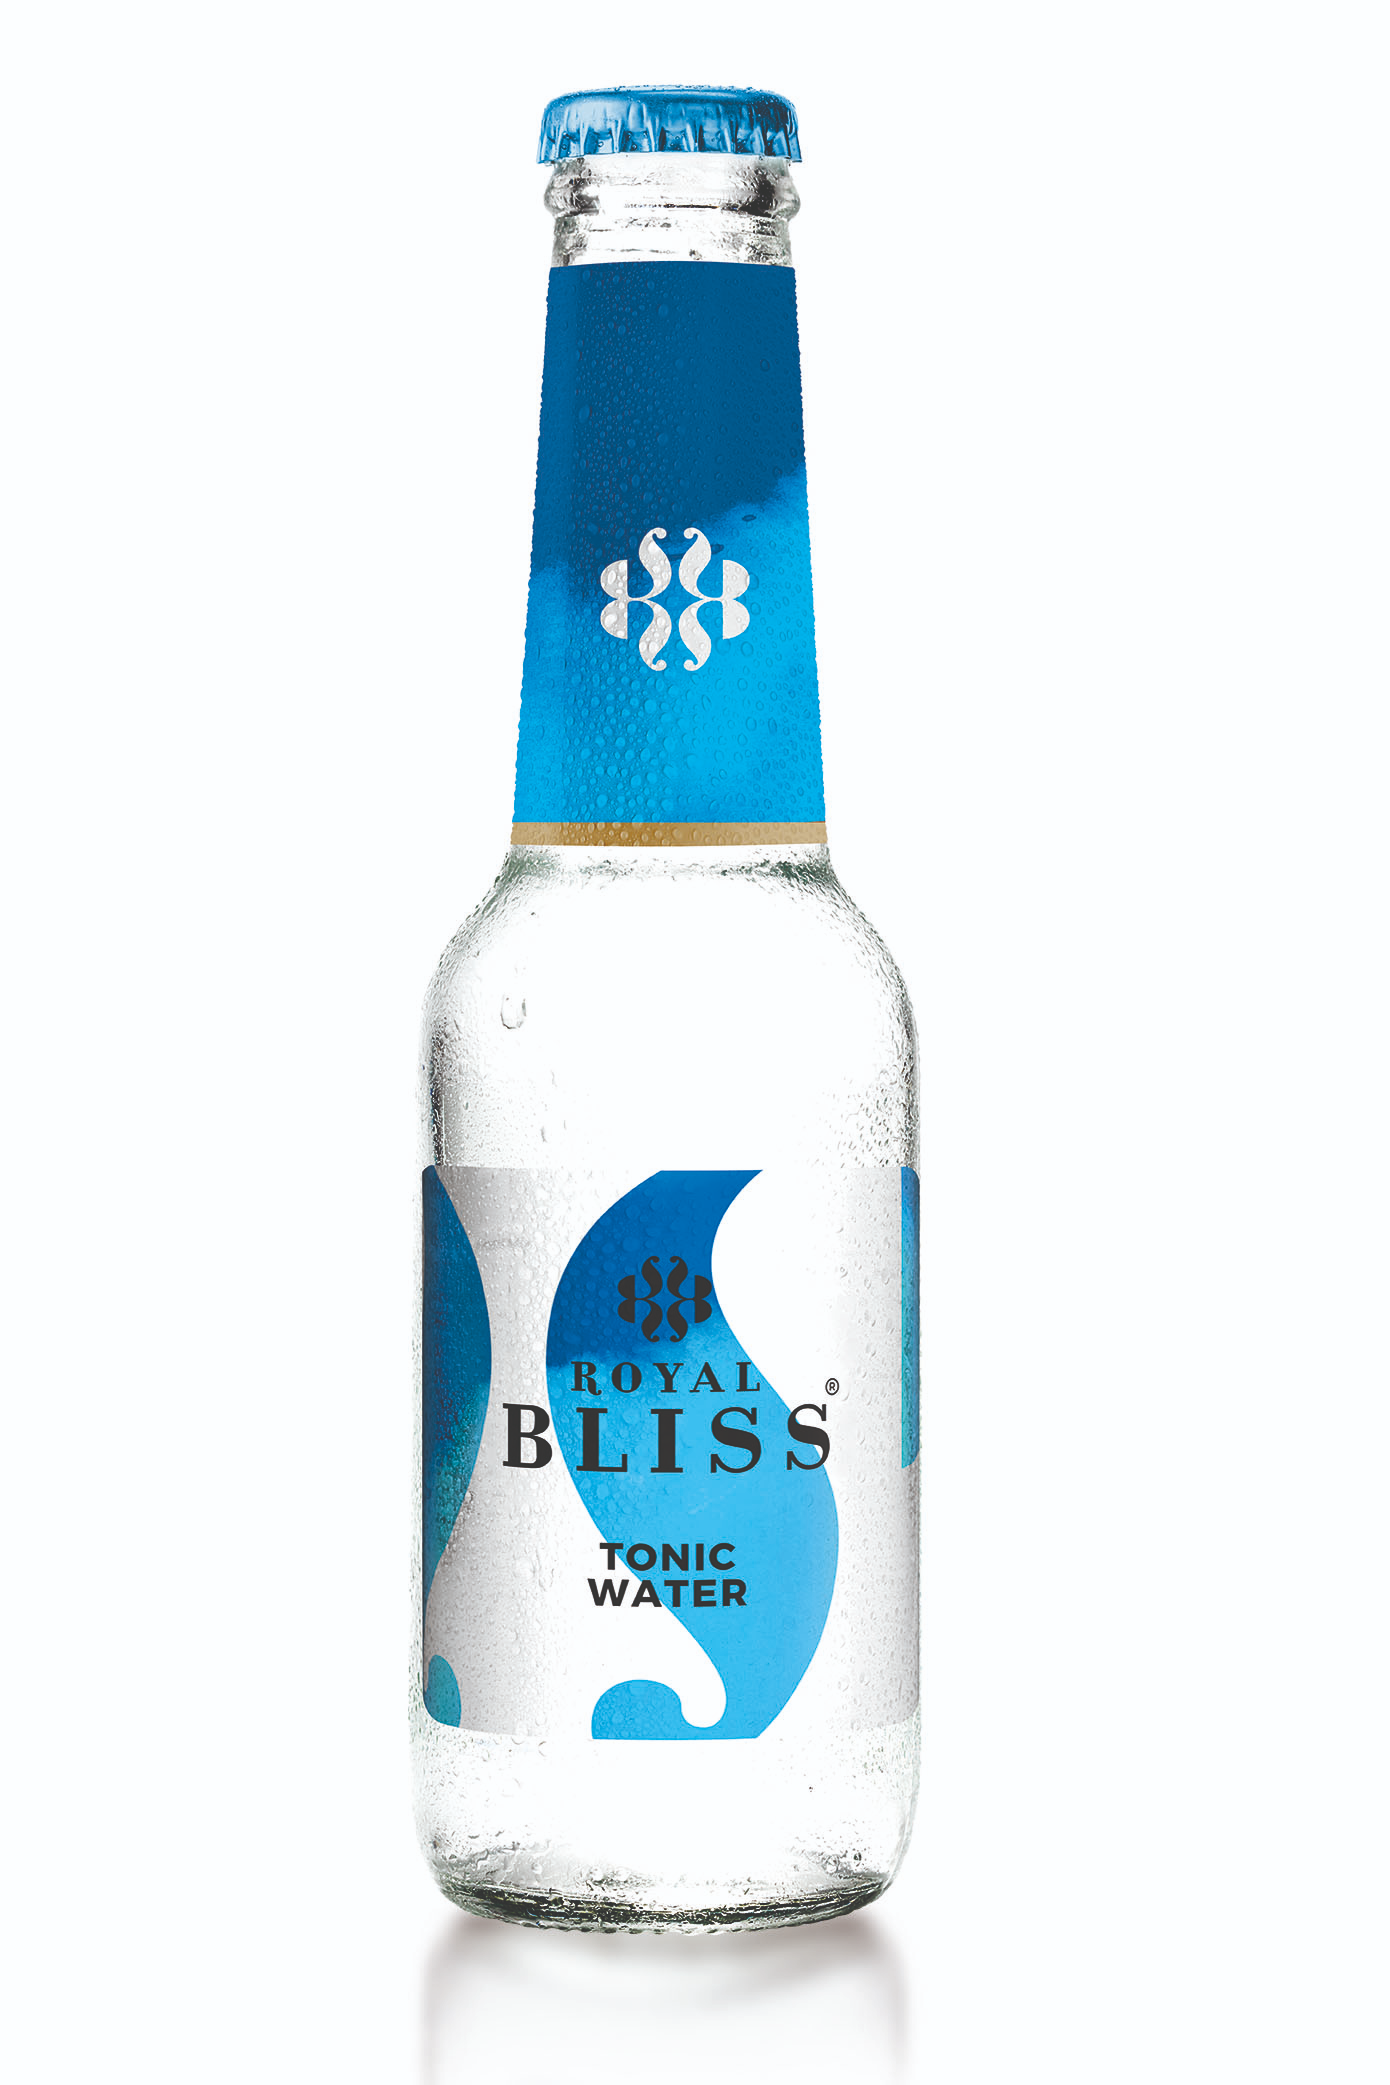 Botella de Royal Bliss Creative Tonic Water